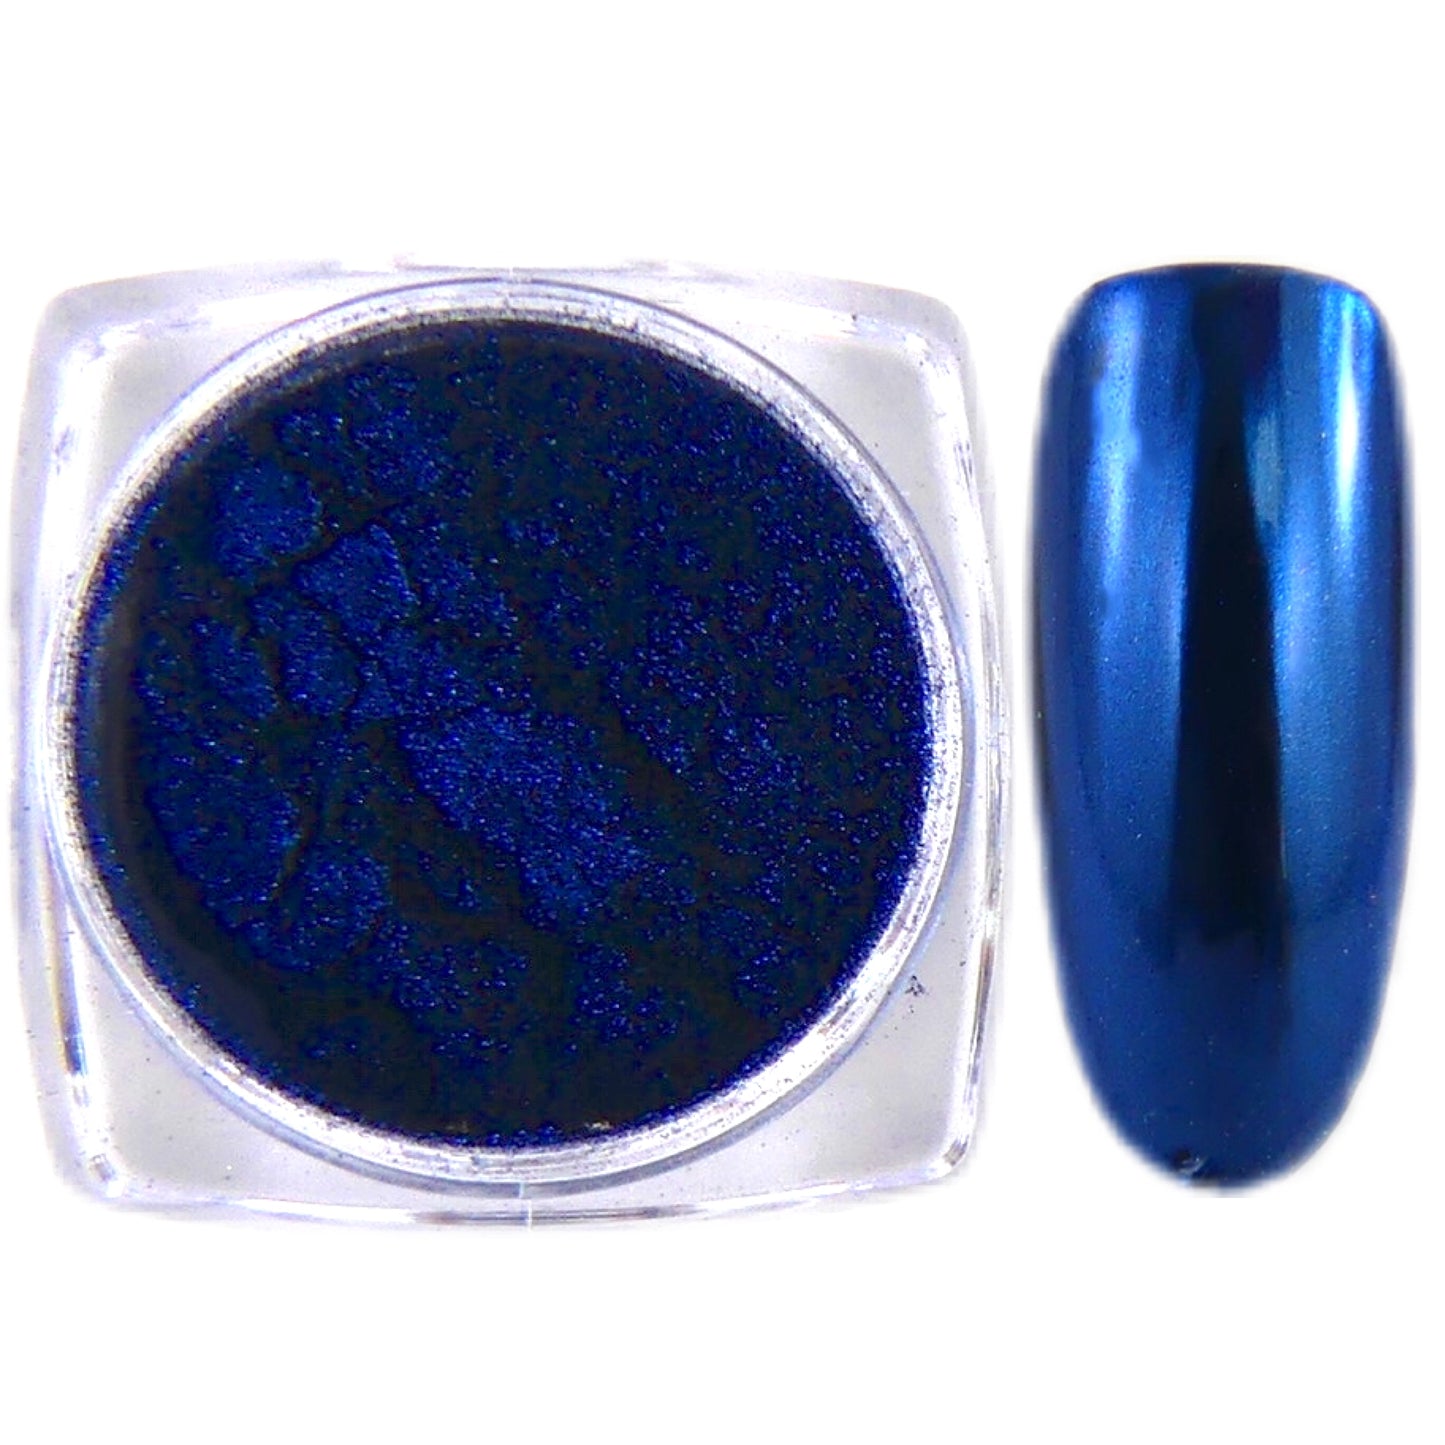 Blue Chrome Nail Art Powder 0.5g - My Little Nail Art Shop